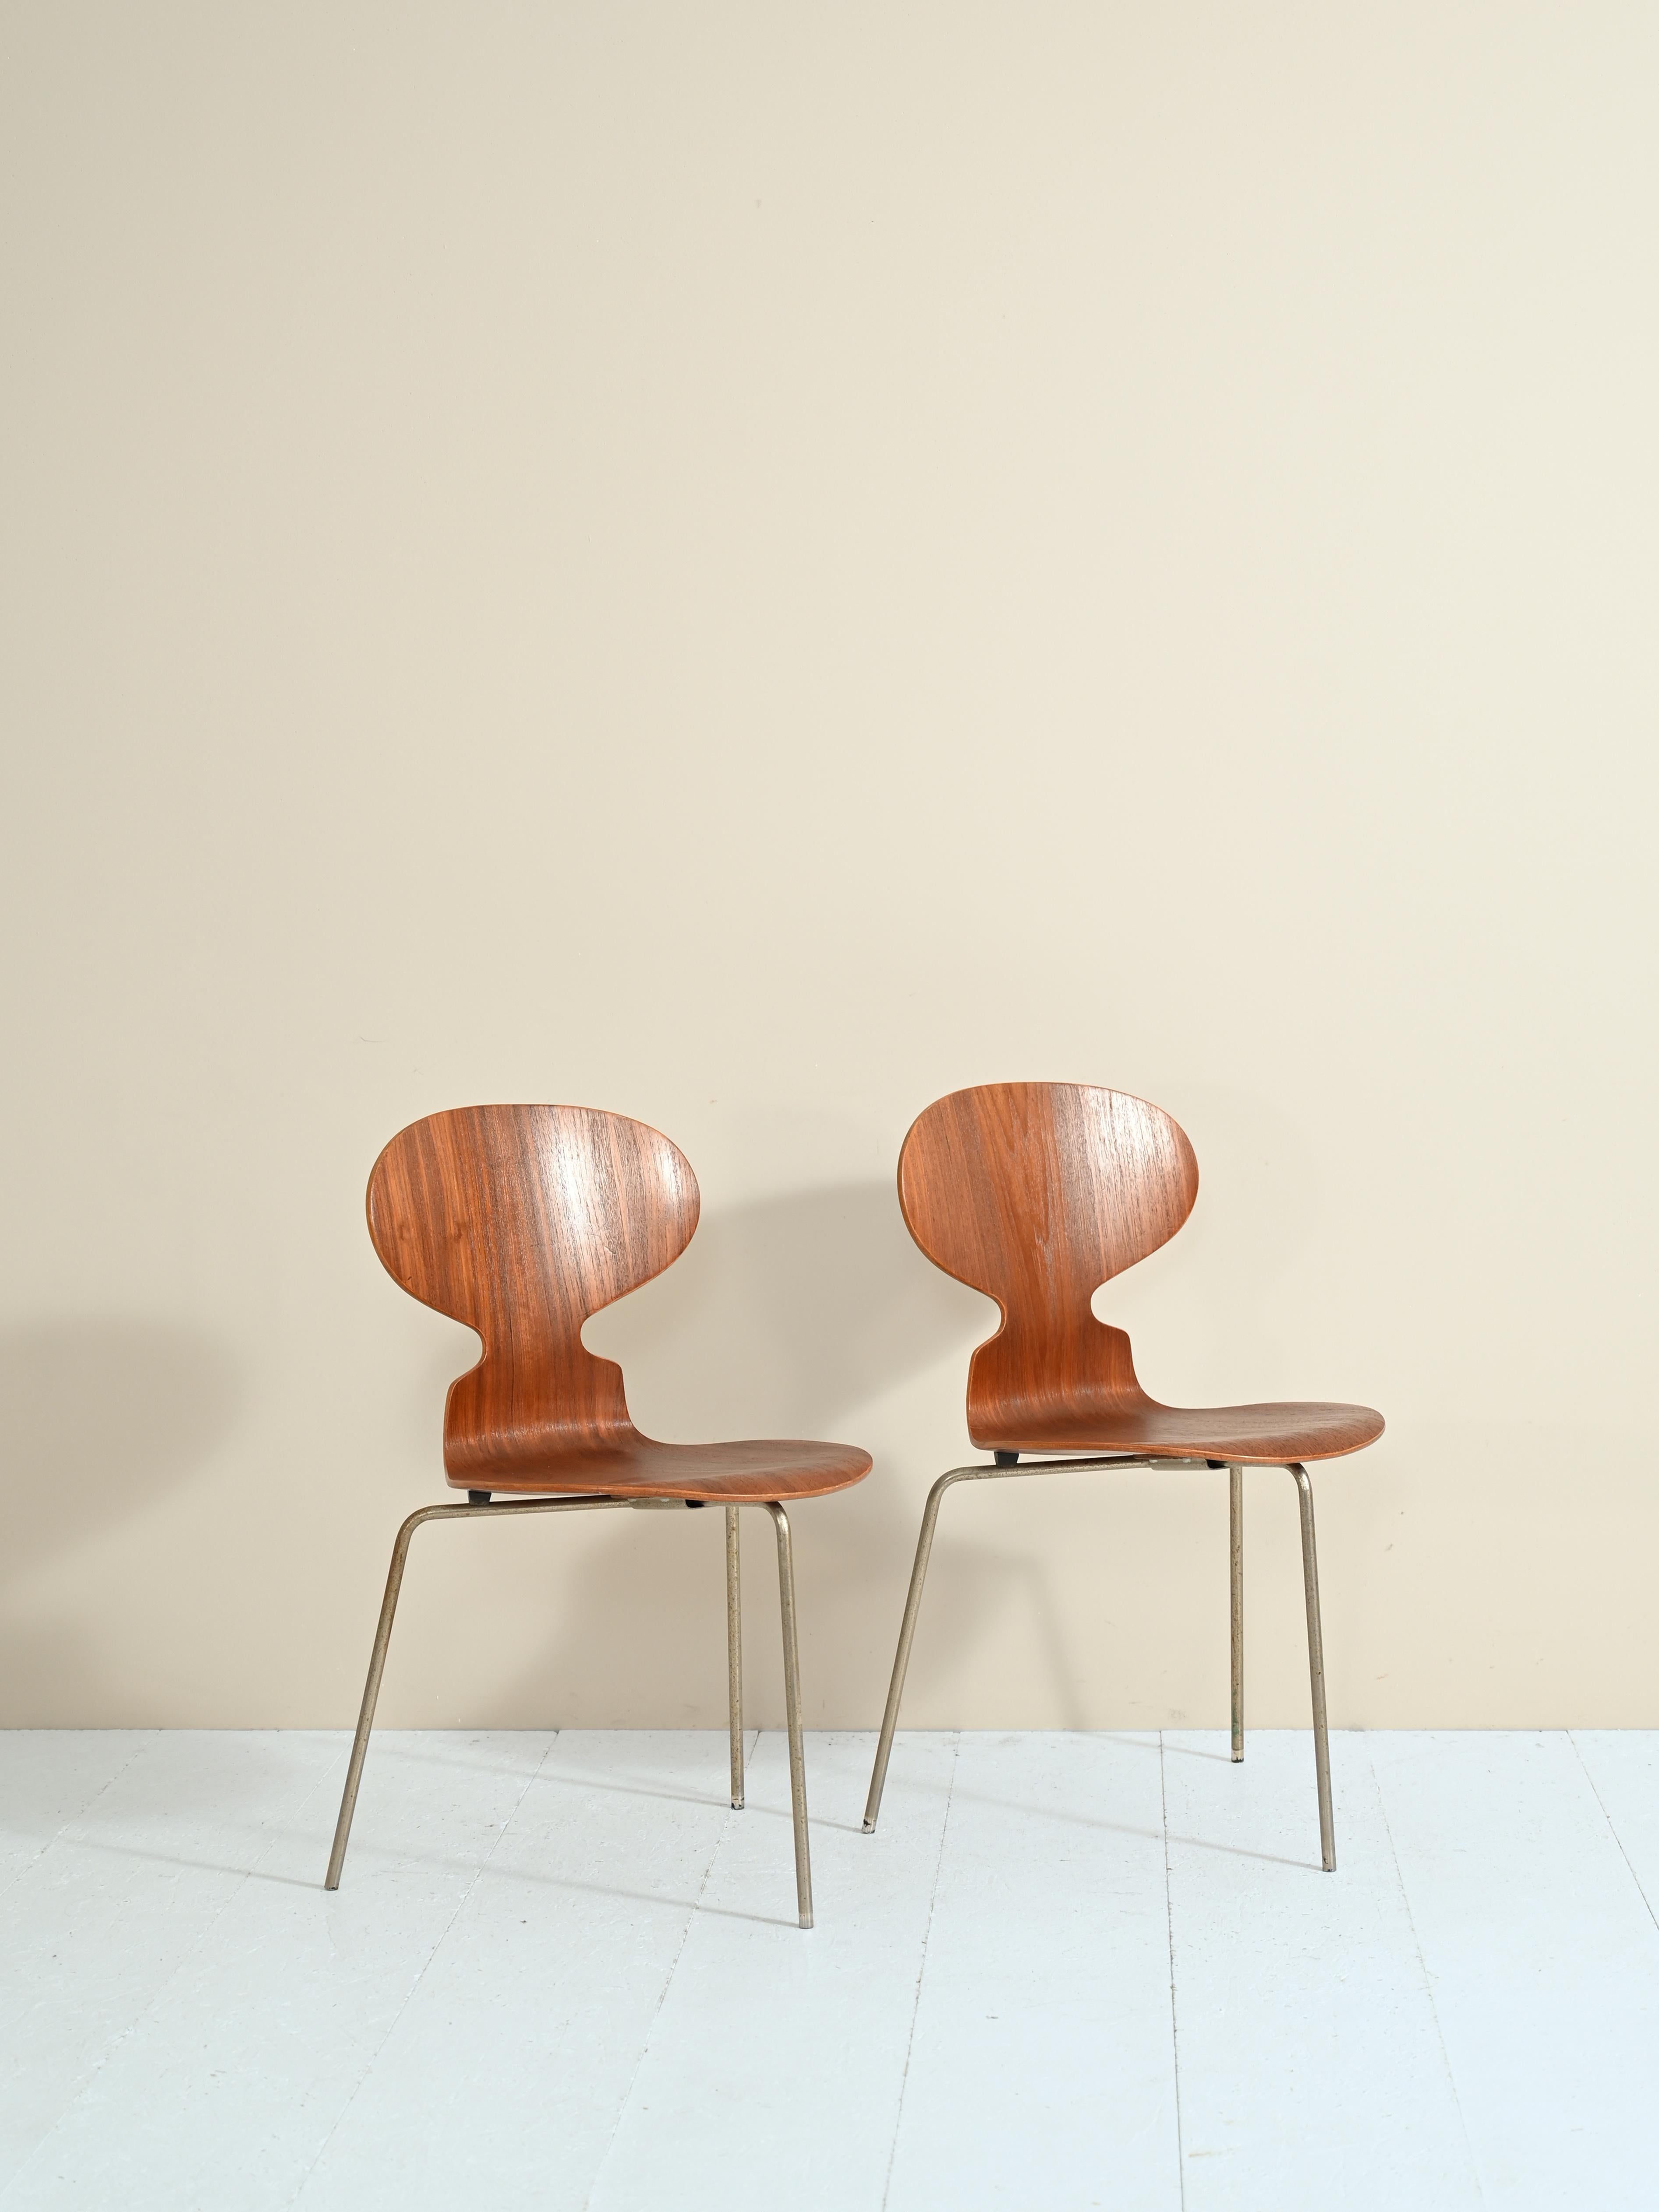 Scandinavian Modern 'Ant Chair' Chairs Model 3101 by Arne Jacobsen for Fritz Hansen